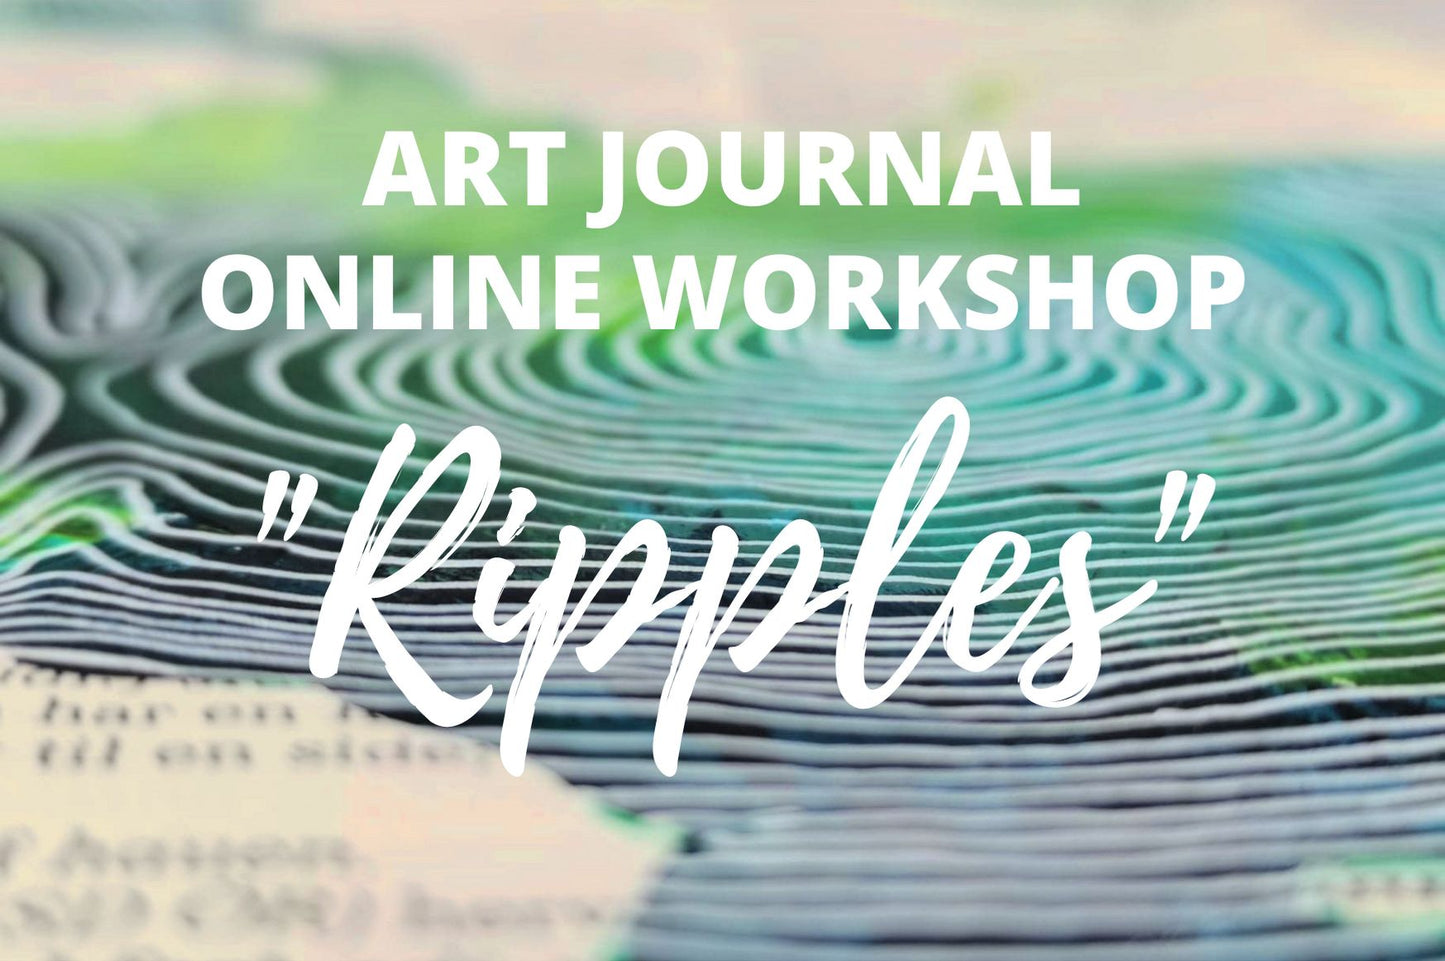 Art Journal - Ripples - online workshop - on demand